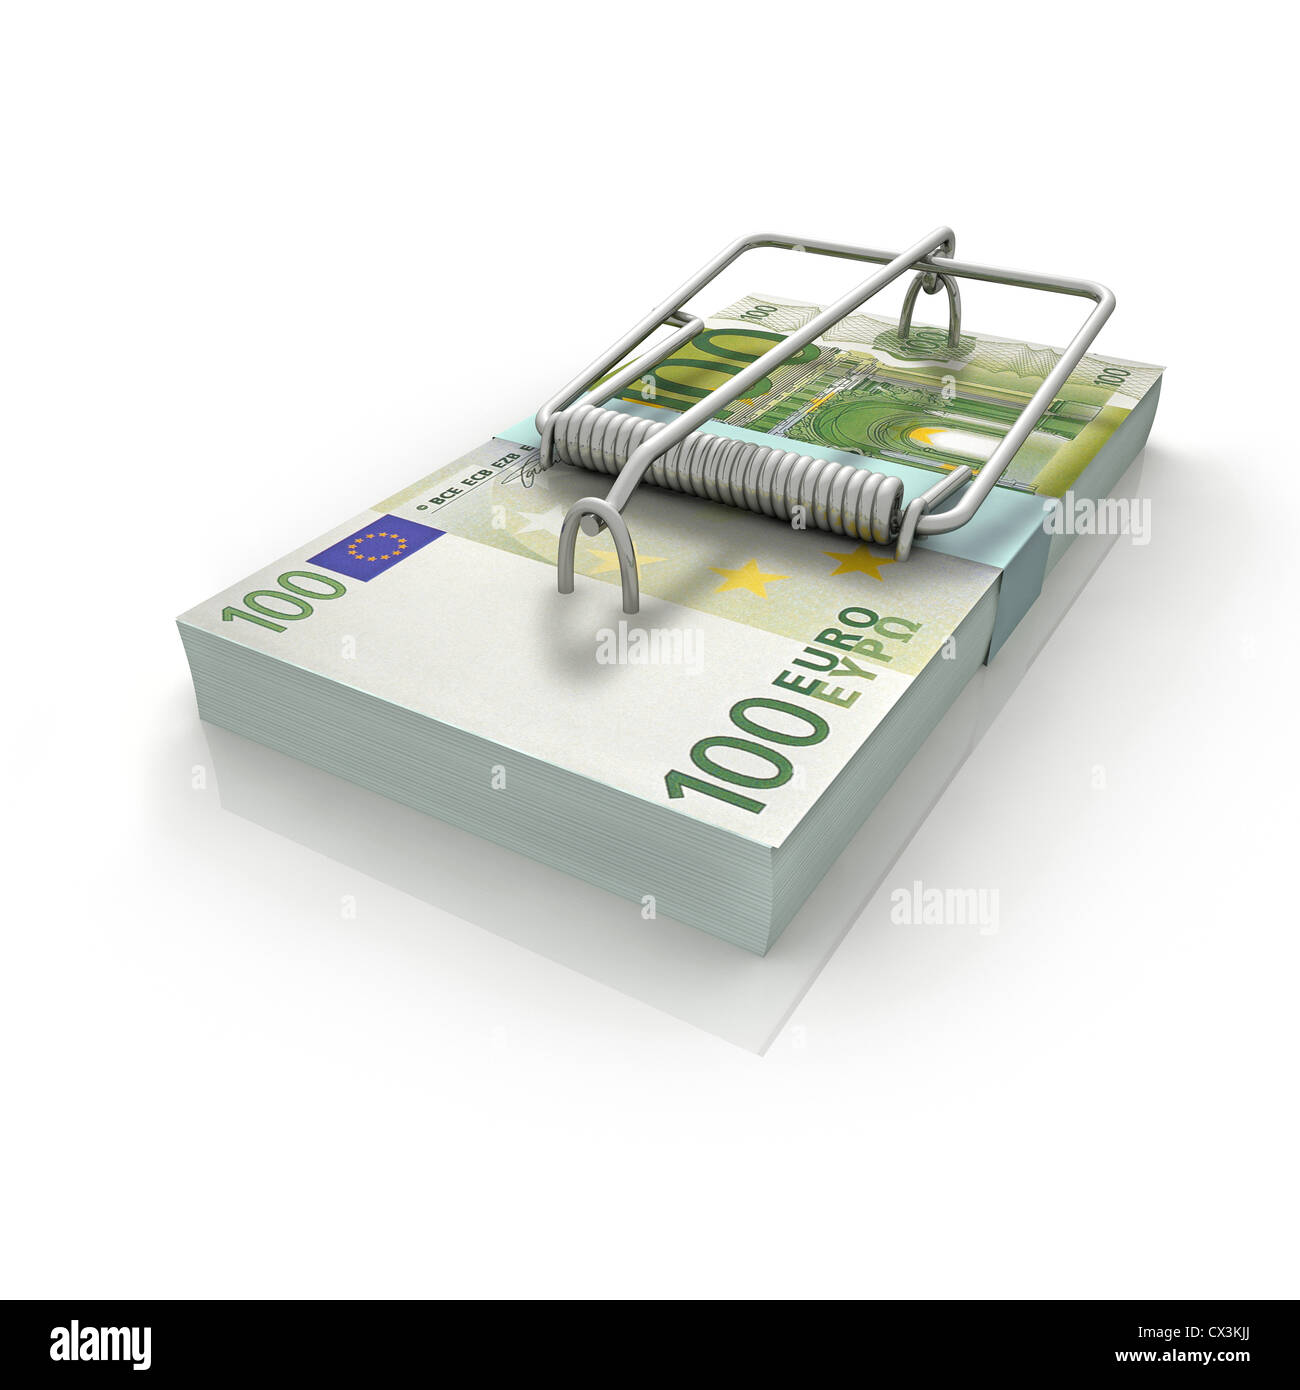 EURO-Mausefalle auf weissem Hintergrund - EURO Mouse Trap on White Background Stock Photo